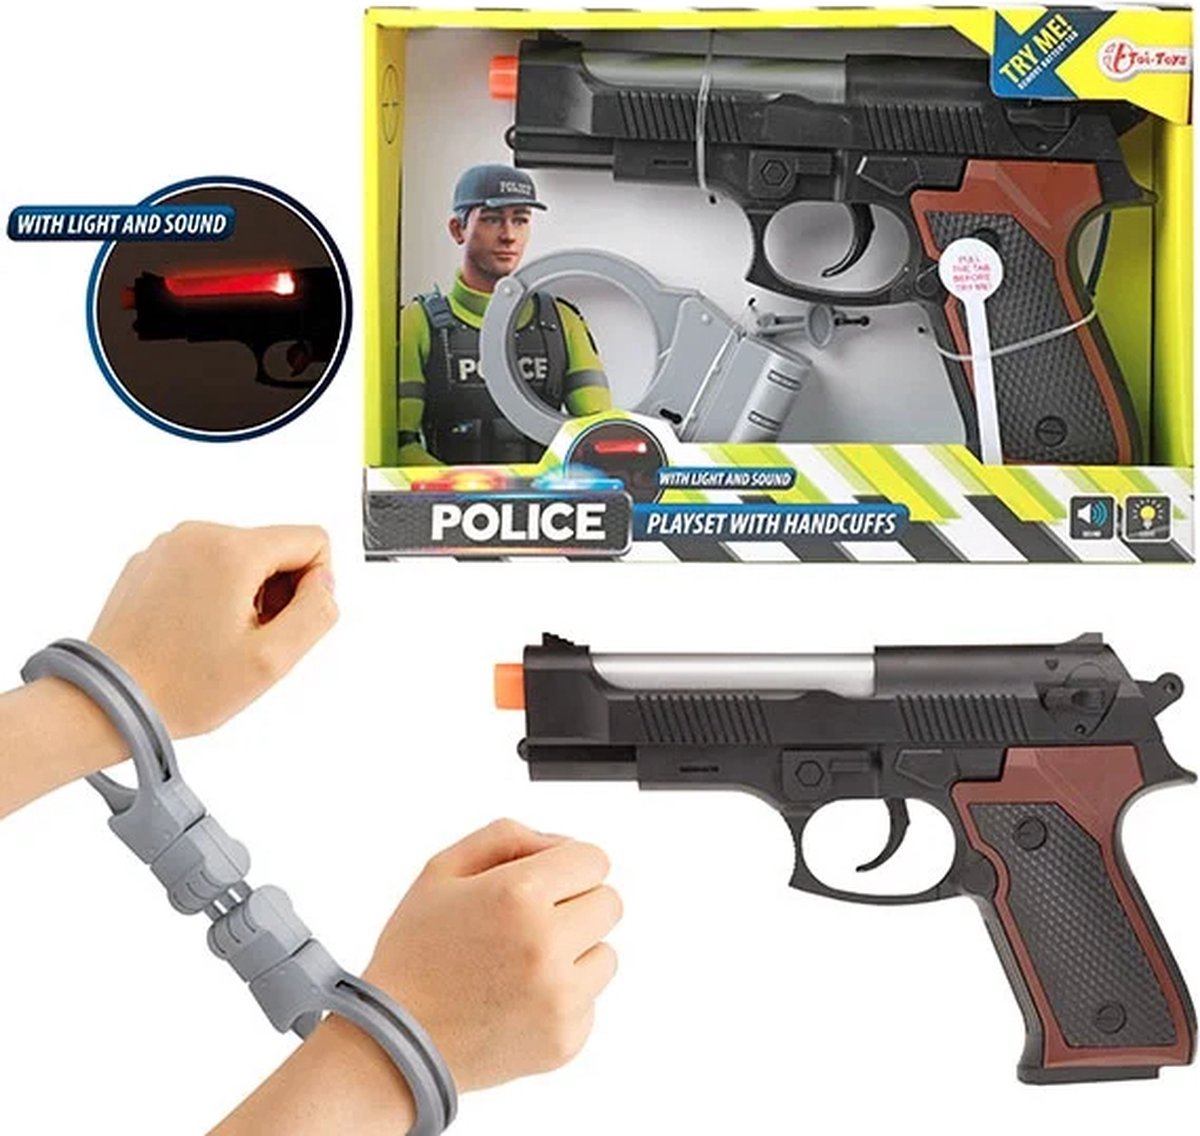 POLICE Politie pistool met Licht en Geluid + handboeien & sleuteltjes - Toi Toys BV